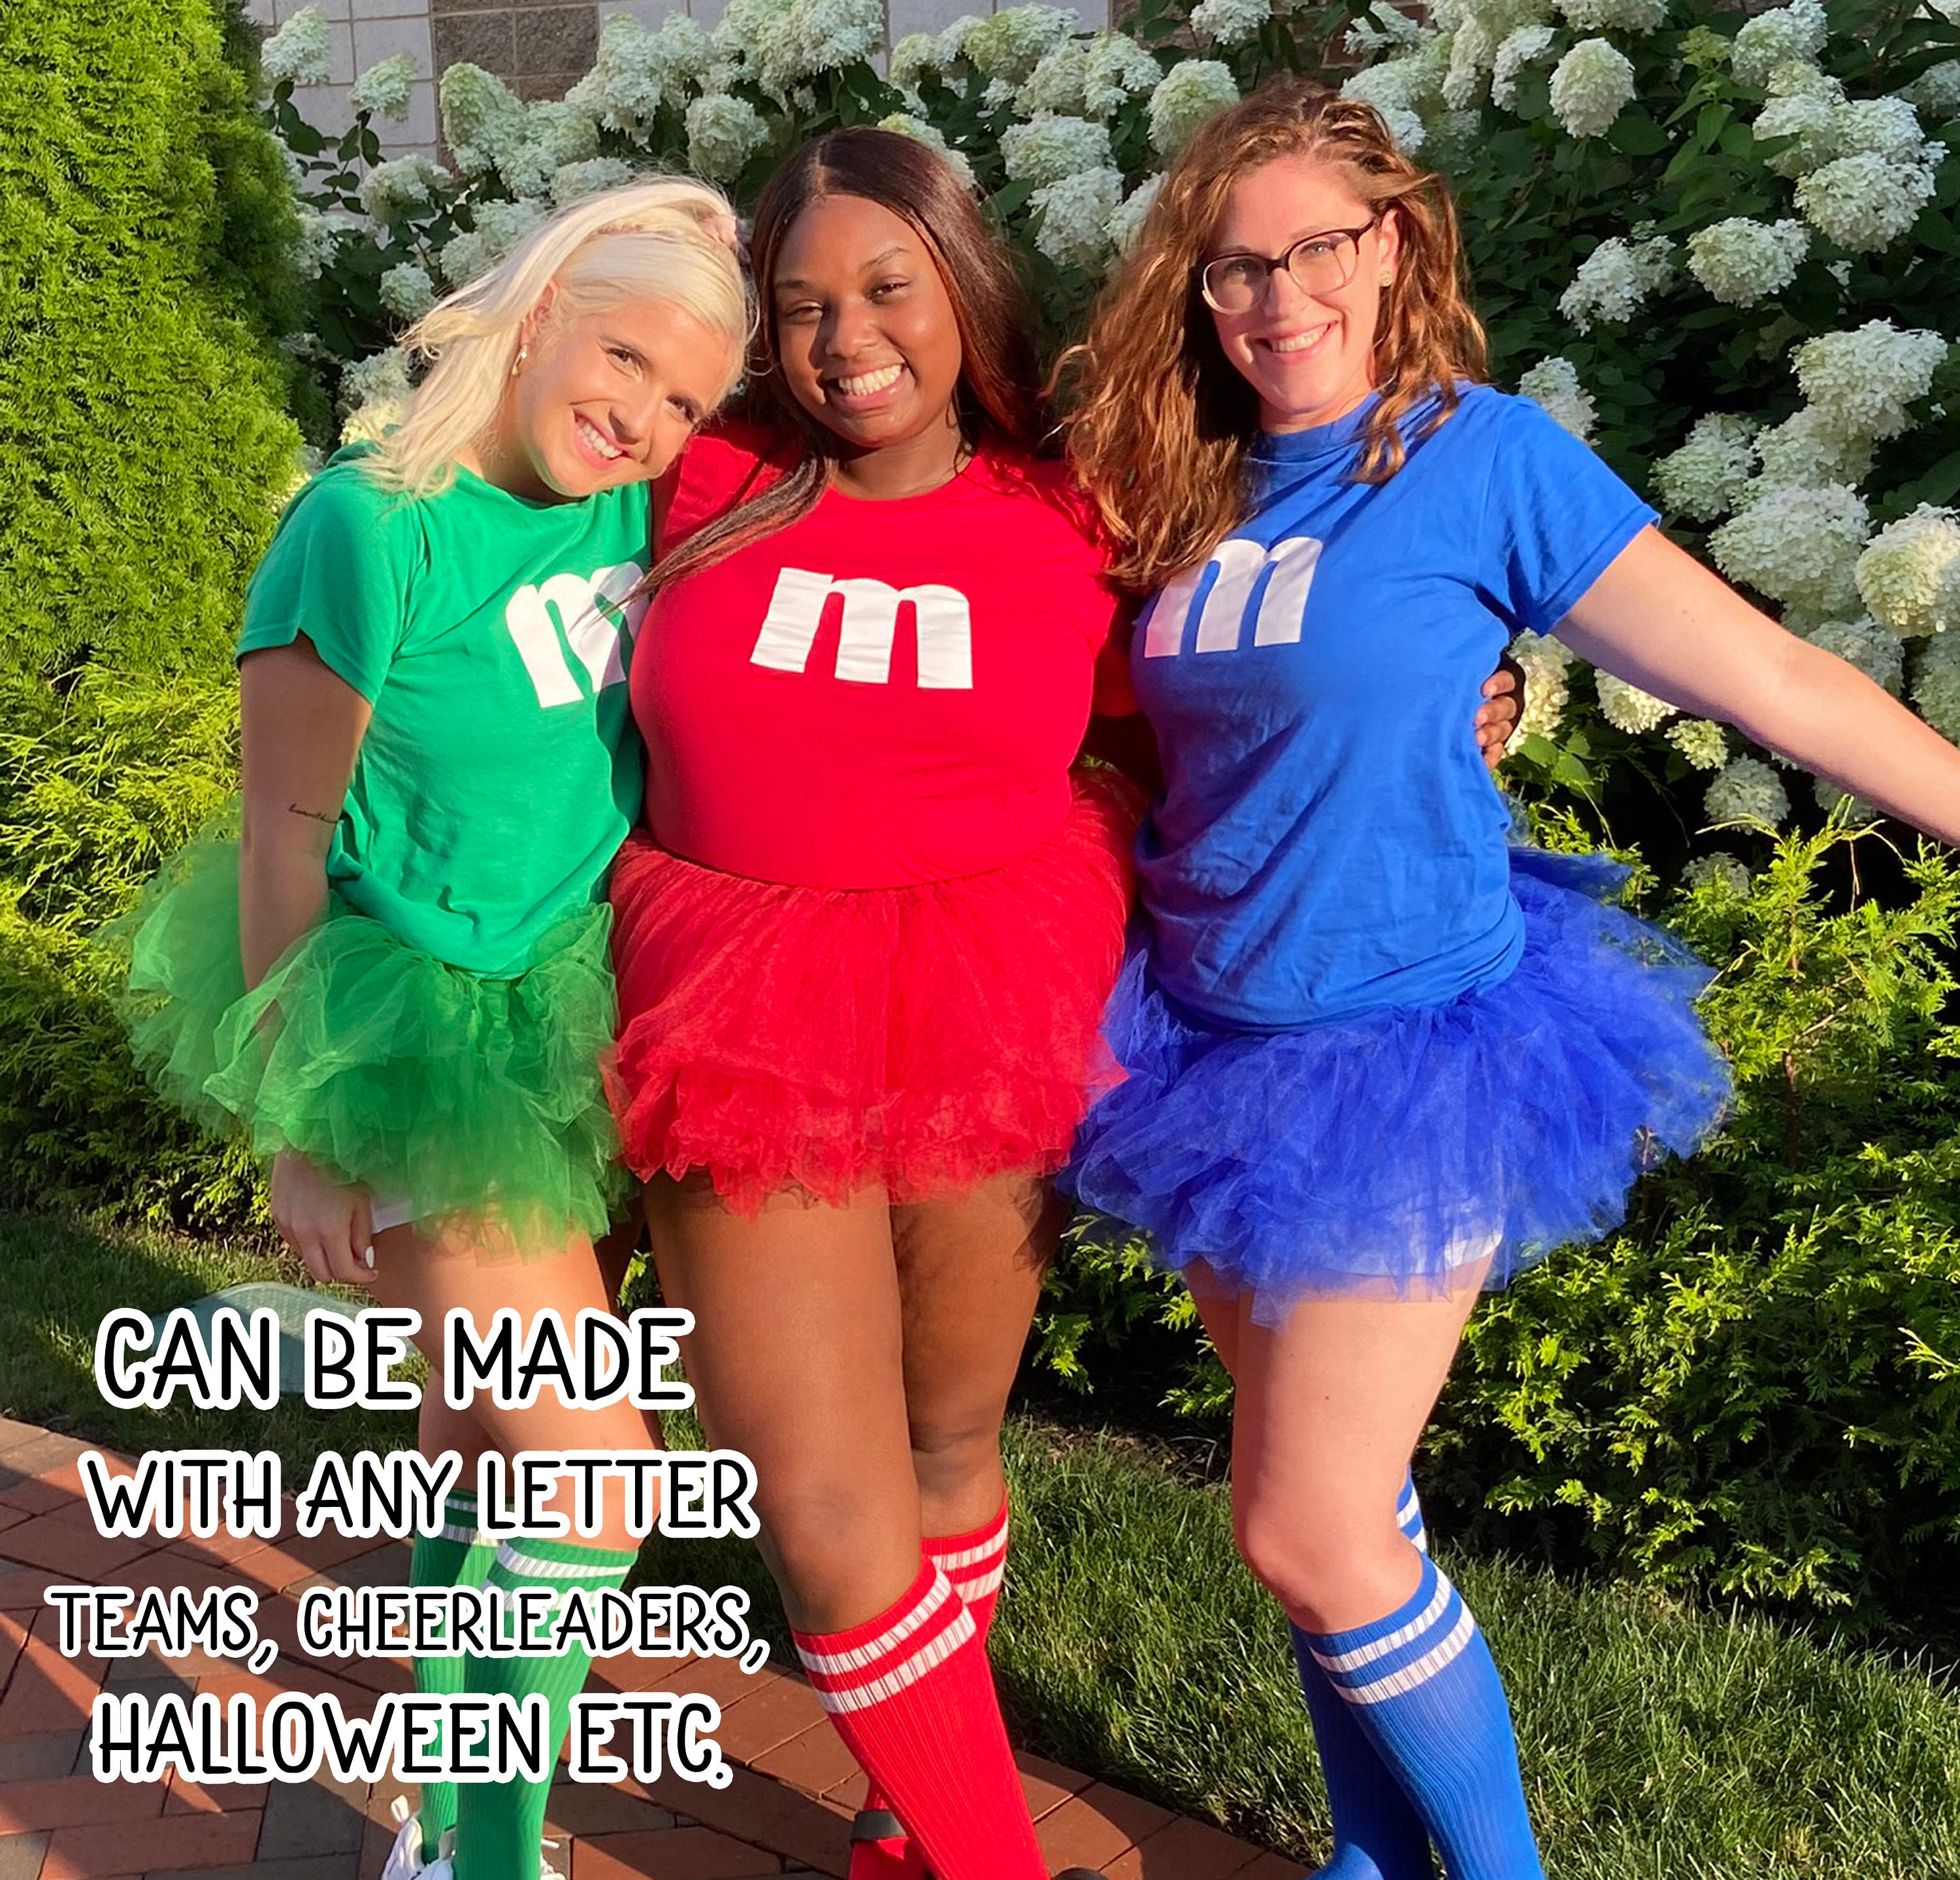 Adult M&M's Green M&M's Costume 